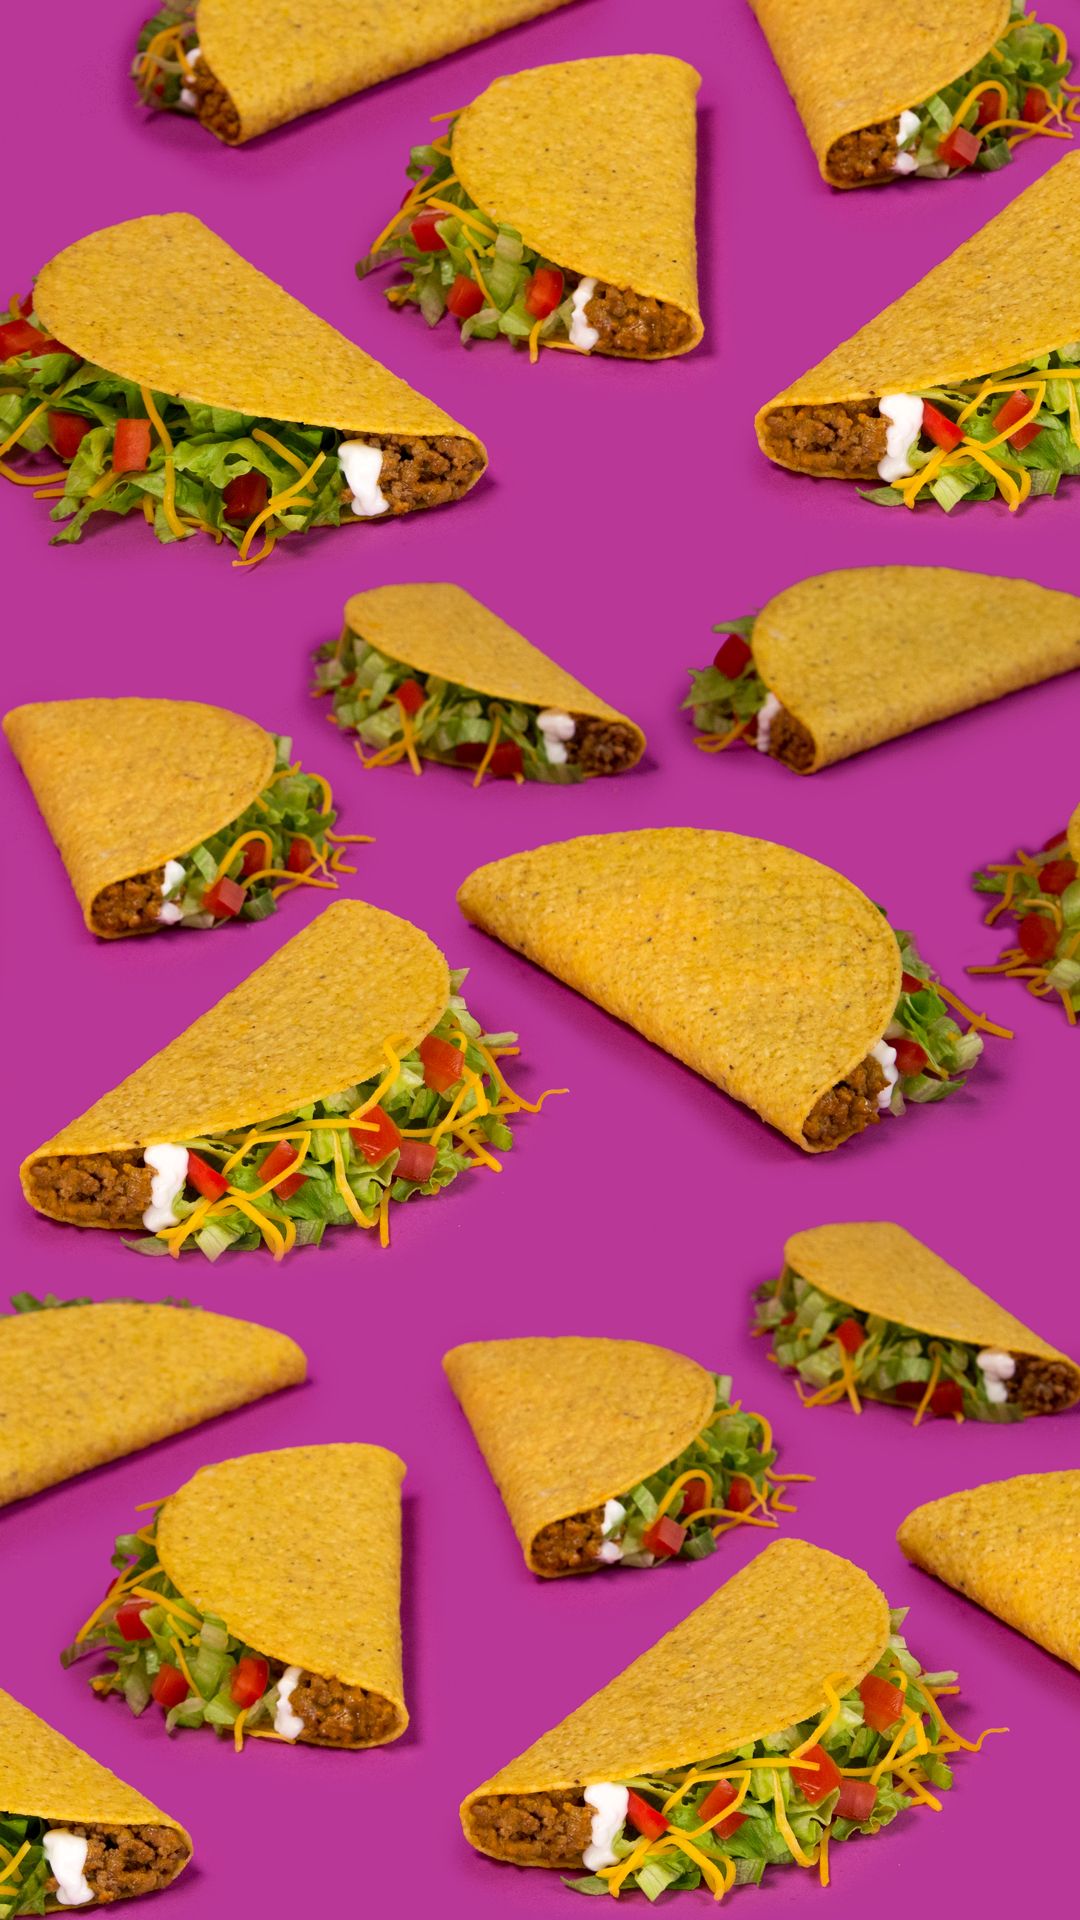 taco bell tapete,essen,gericht,rezept,snack